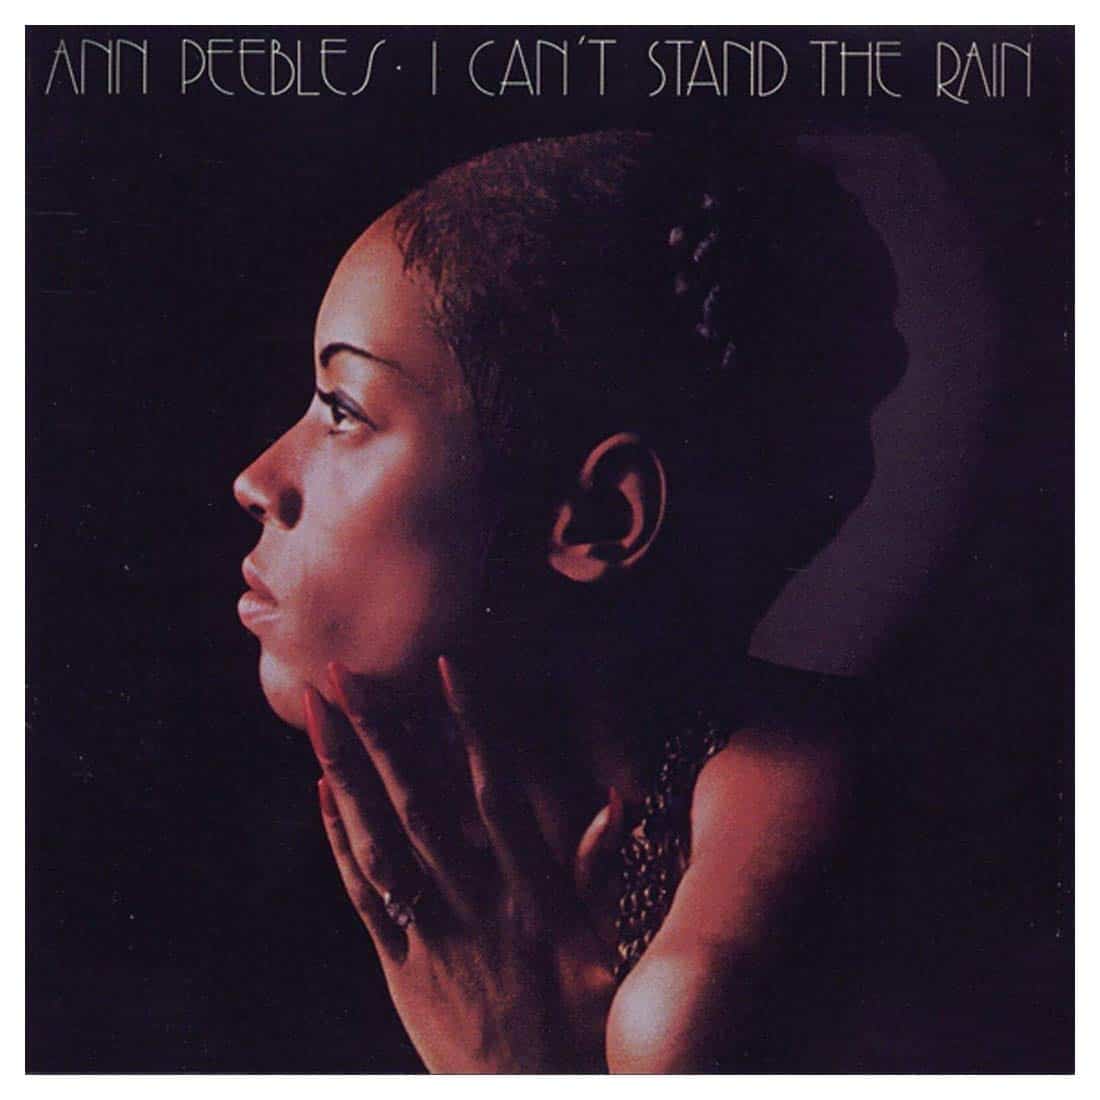 Ann-Peebles-I-Cant-Stand-the-Rain-vinyl-record-album-front